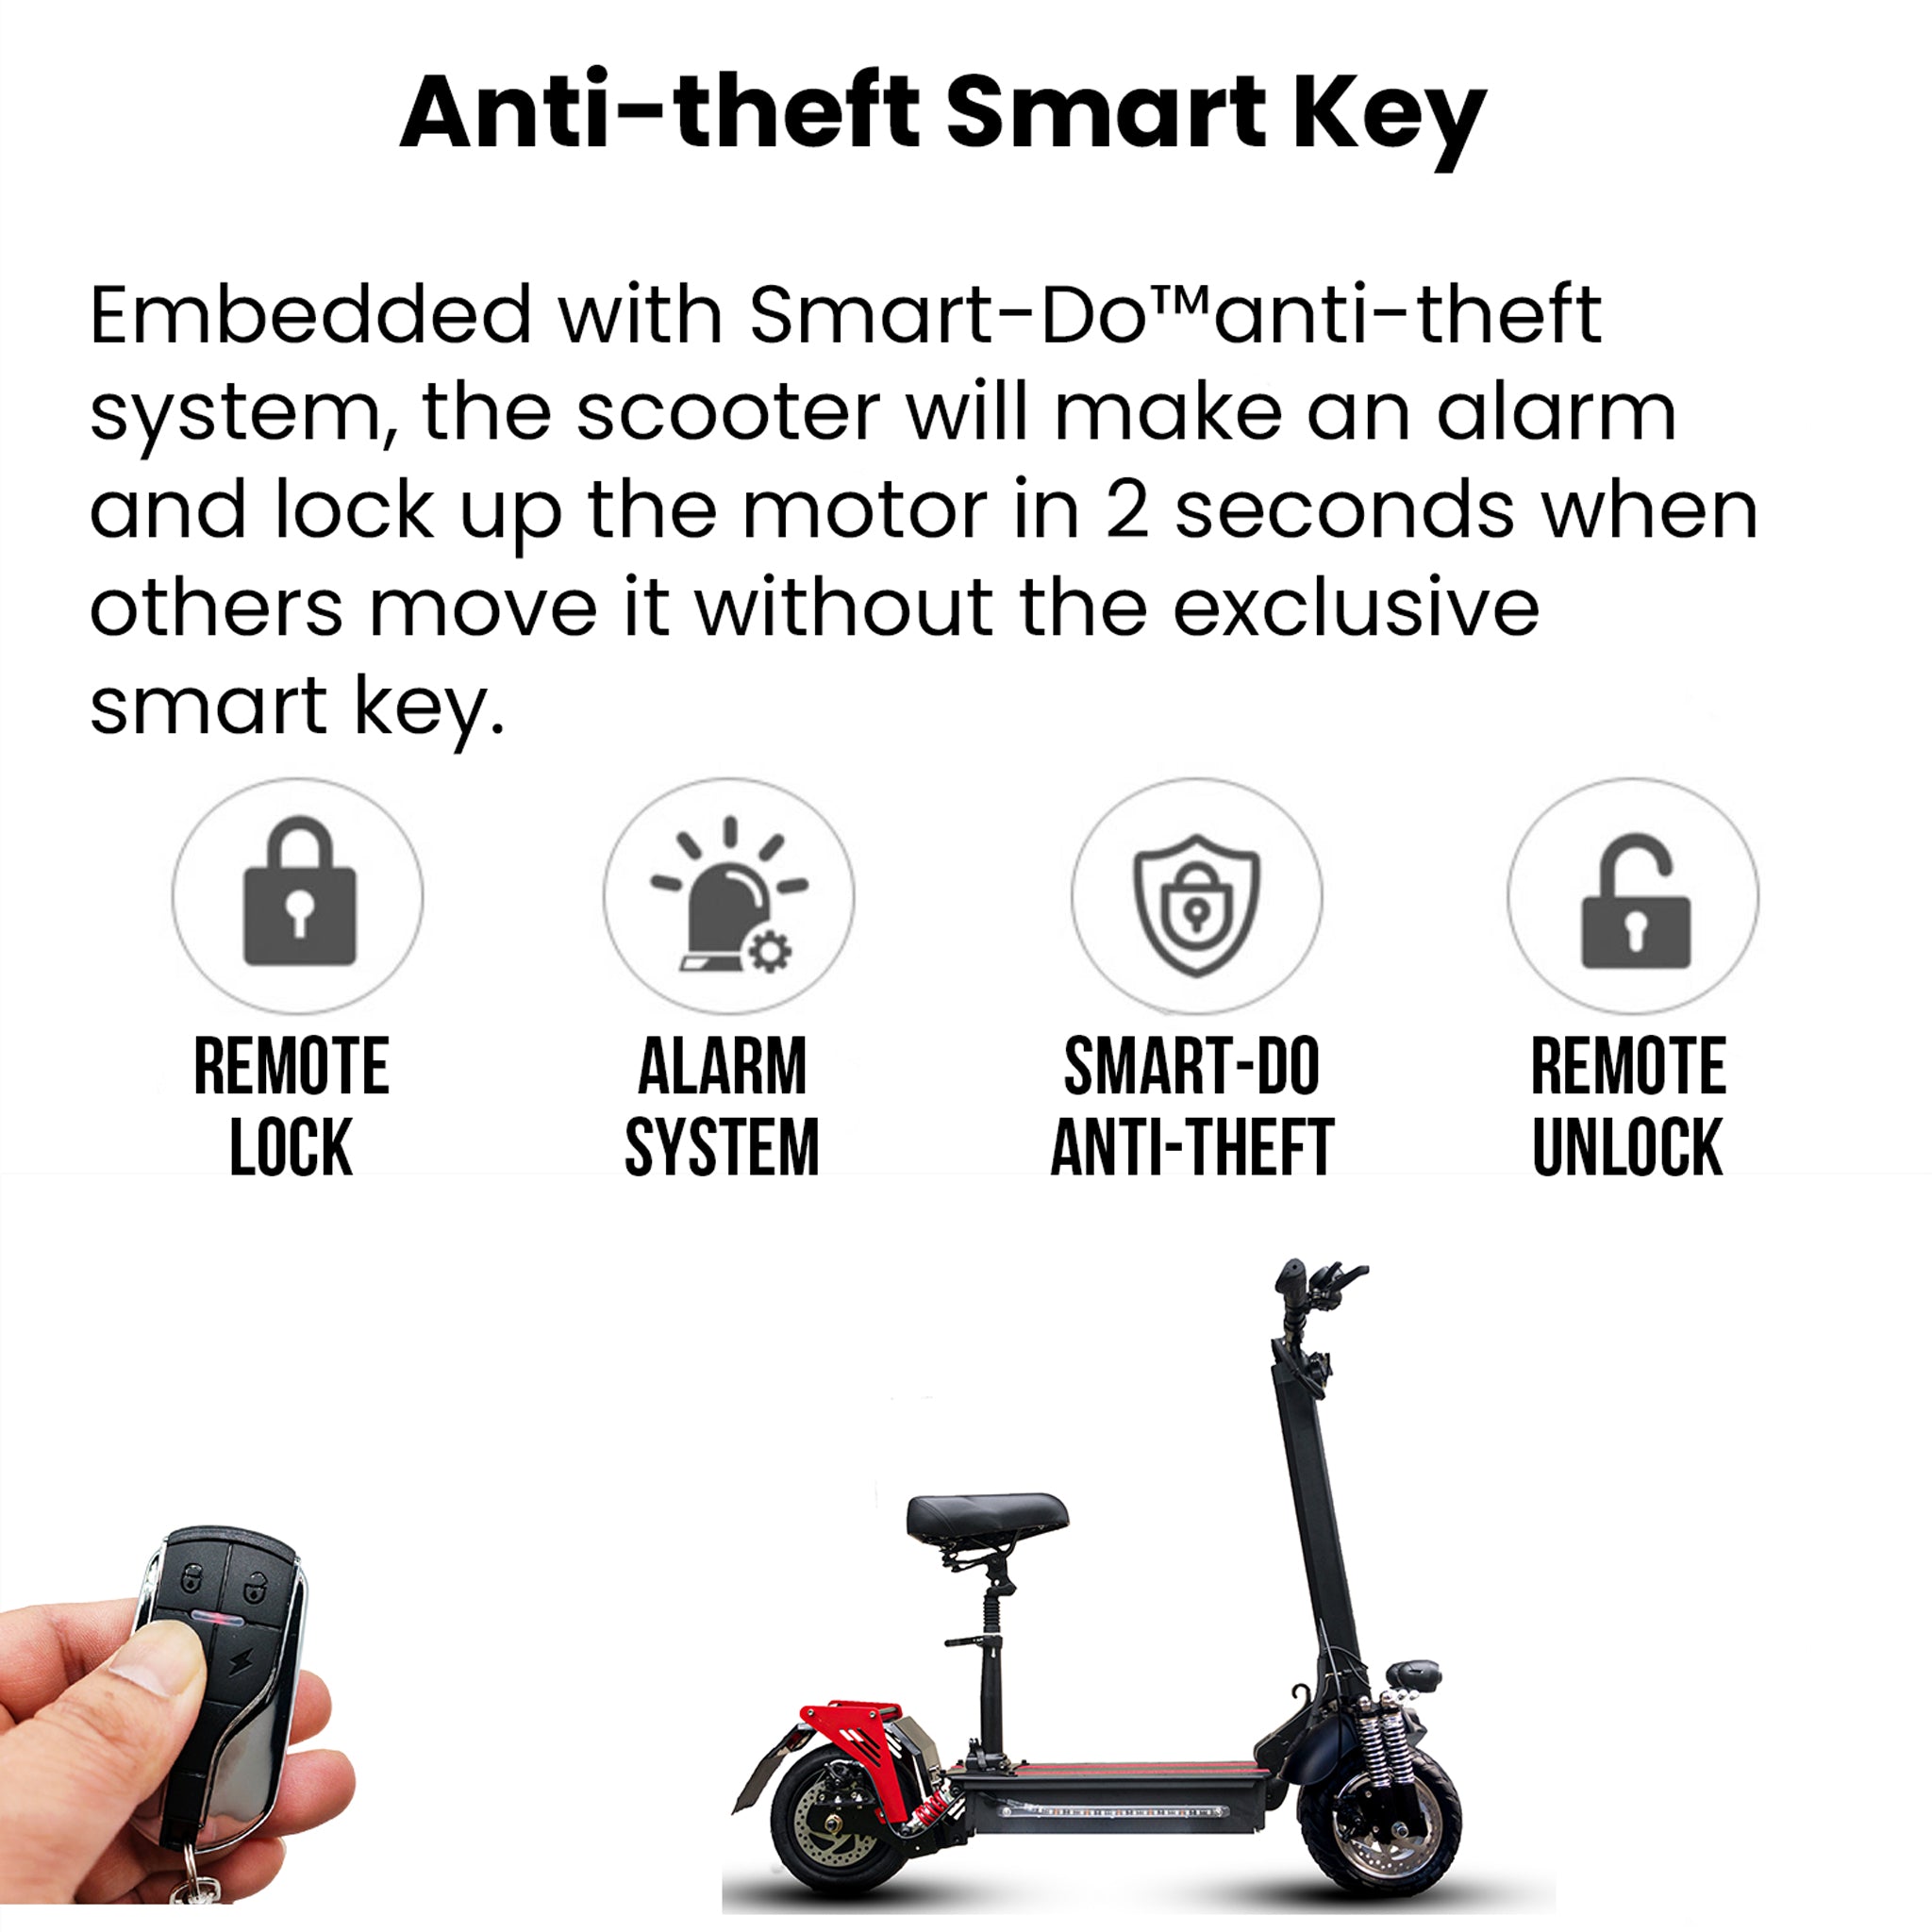 𝐅𝐑𝐄𝐄 𝐁𝐎𝐍𝐔𝐒: Anti-theft System